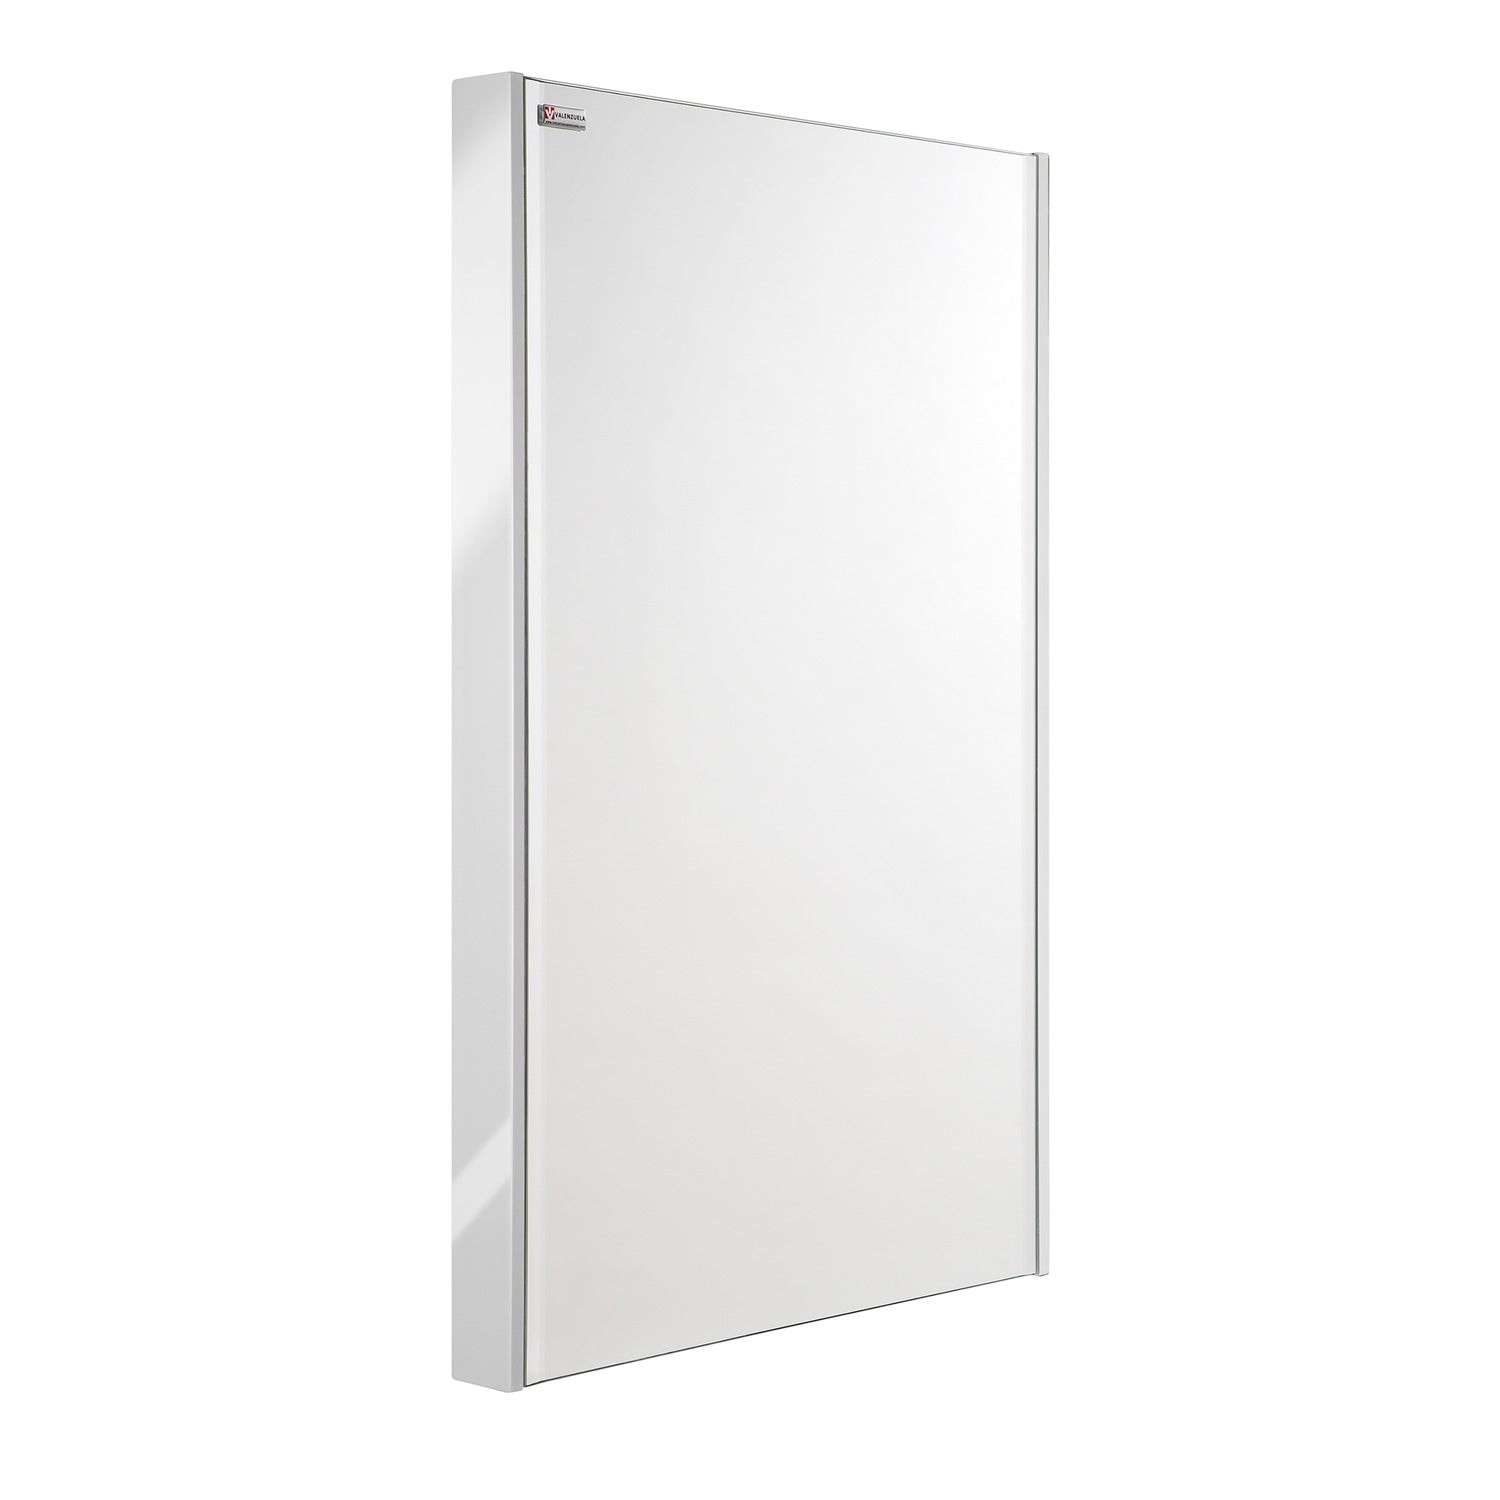 Slim Frame Bathroom Vanity Mirror, Wall Mount, Serie Dune/Solco by VALENZUELA